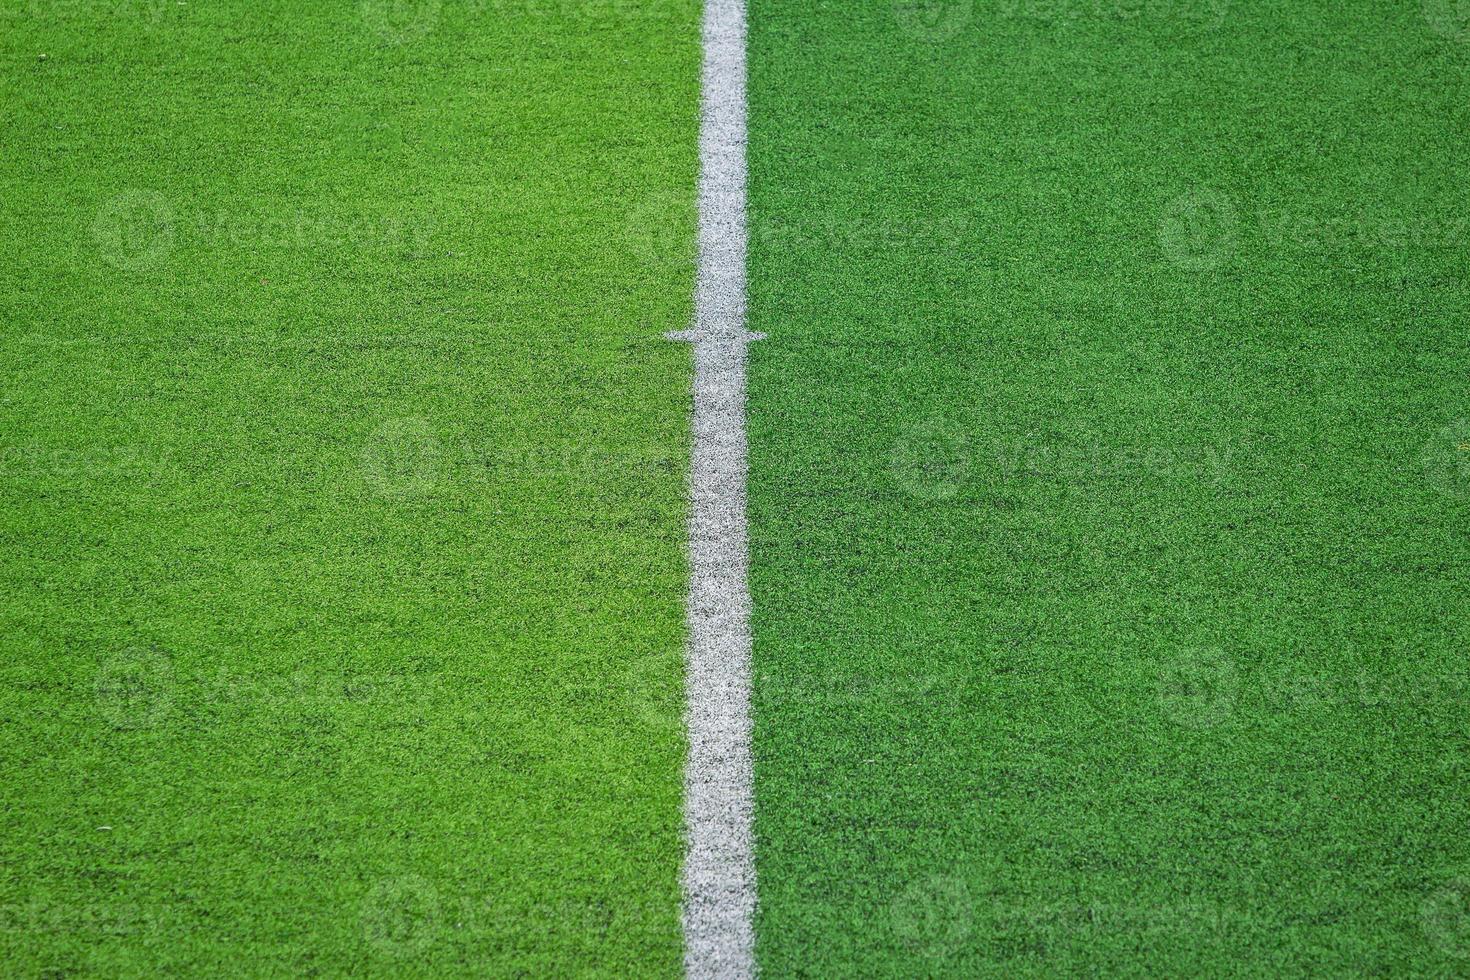 kunstgras van voetbal voetbalveld foto